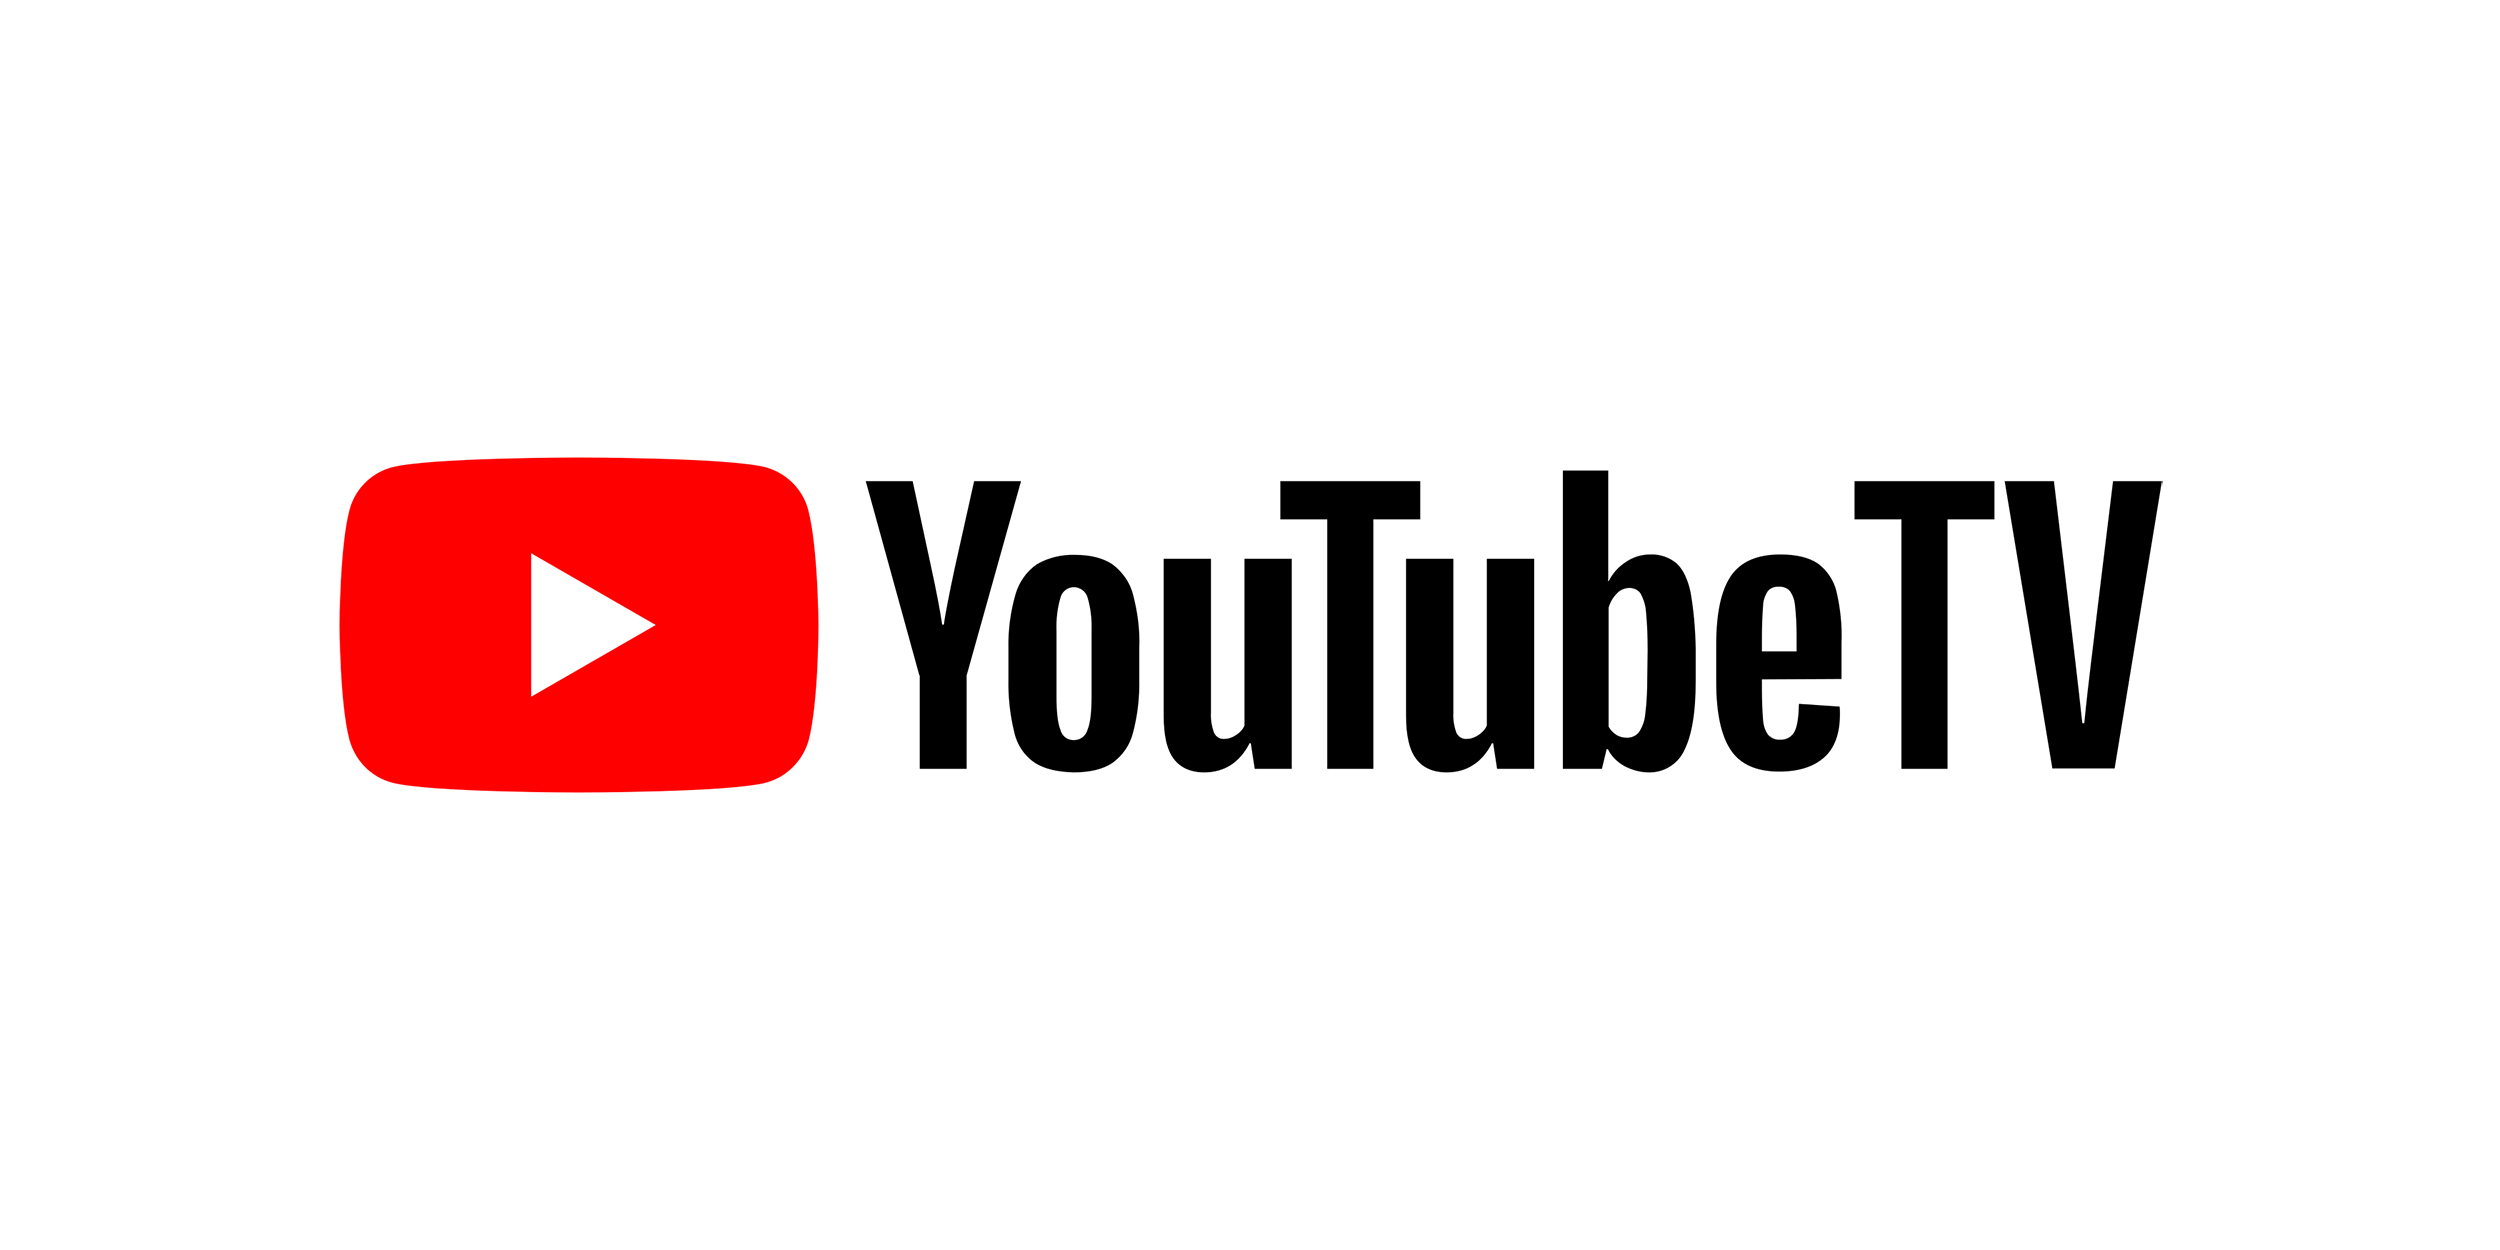 youtube channel logo maker free